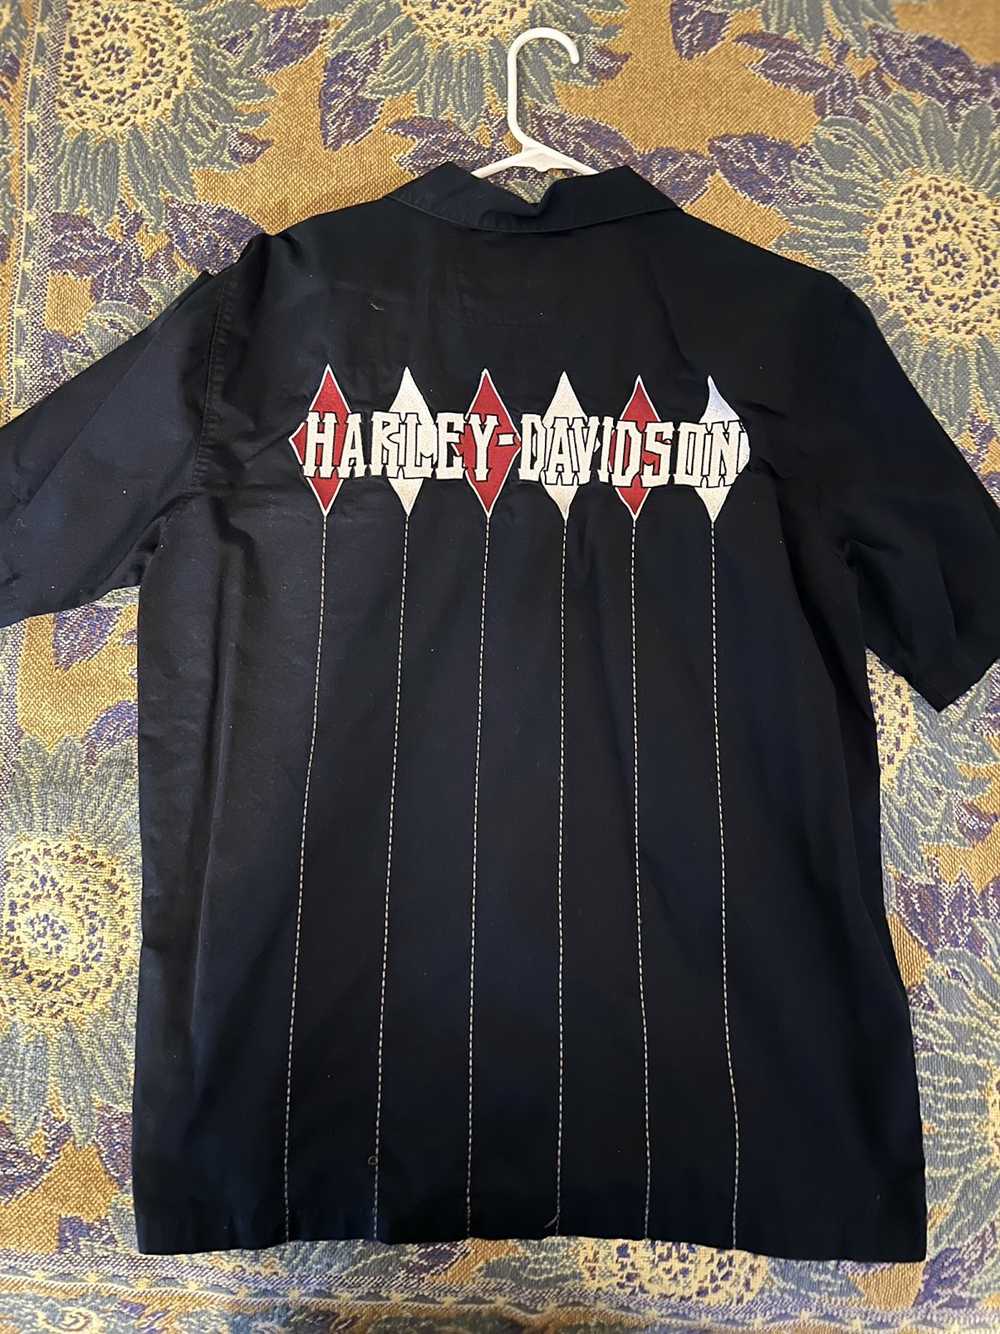 Harley Davidson Harley Davidson bowling shirt - image 5